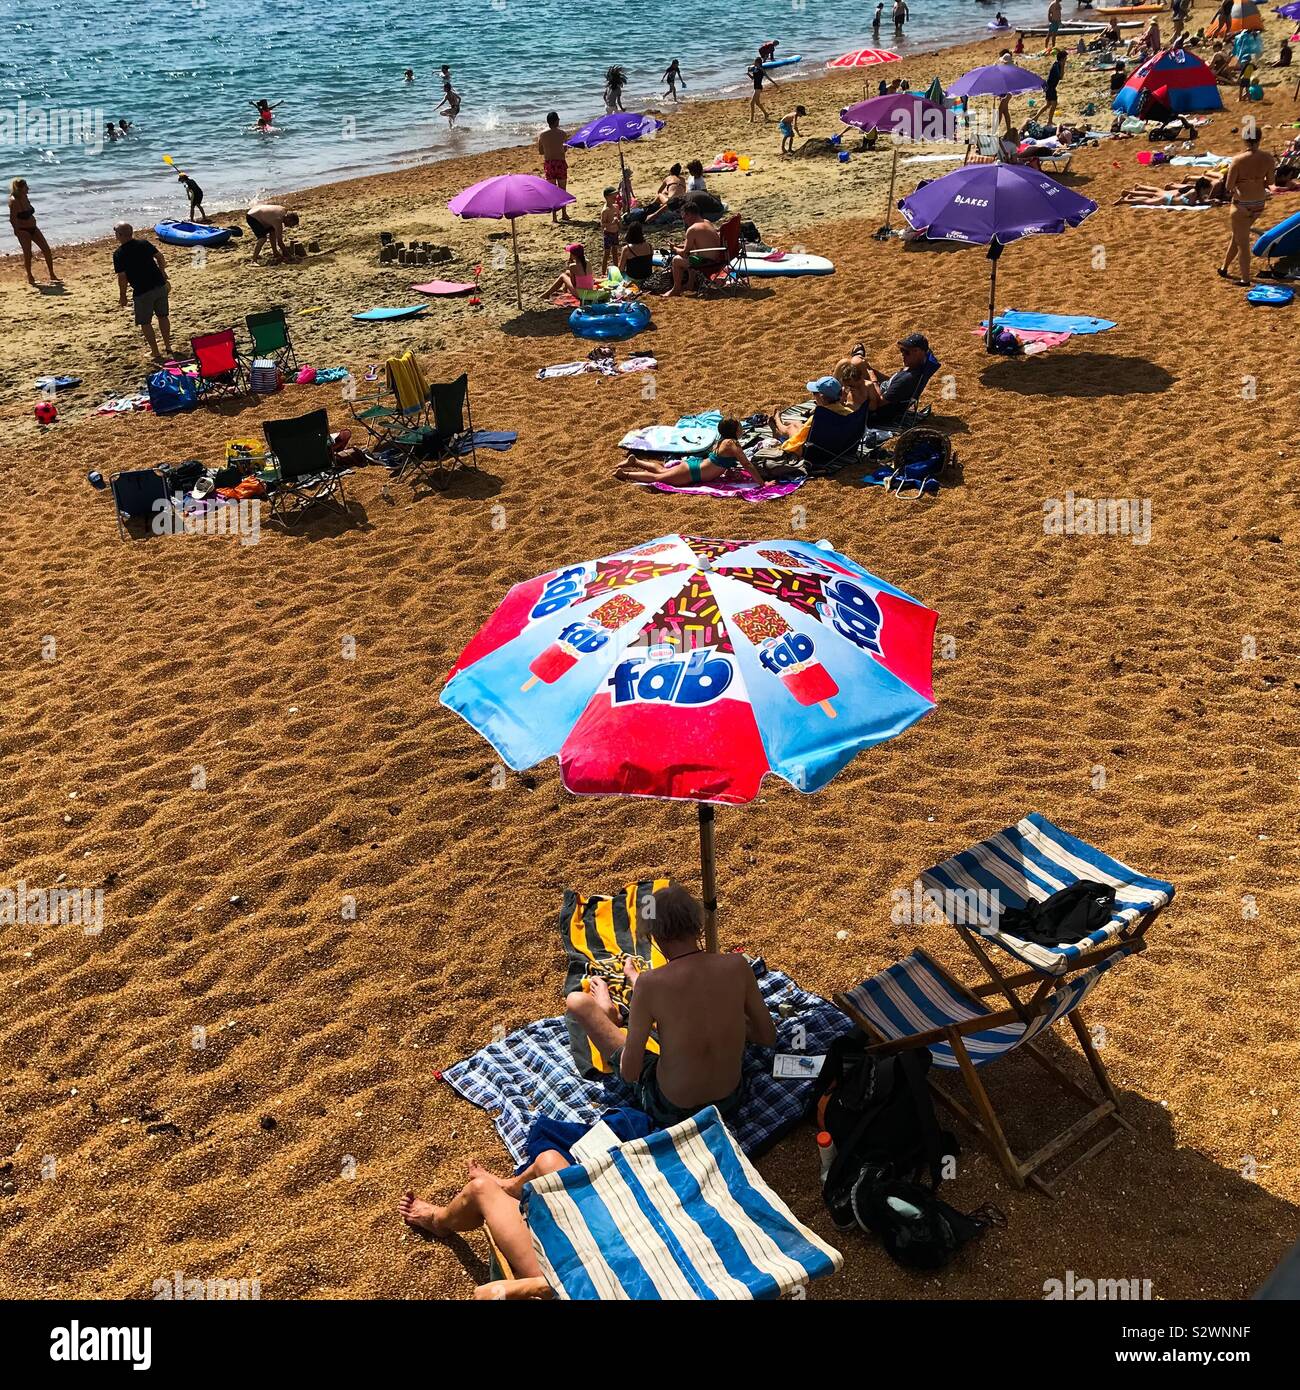 On the beach British summer scene with a colourful beach umbrella sun shade at Ventnor beach on the Isle of Wight Stock Photo